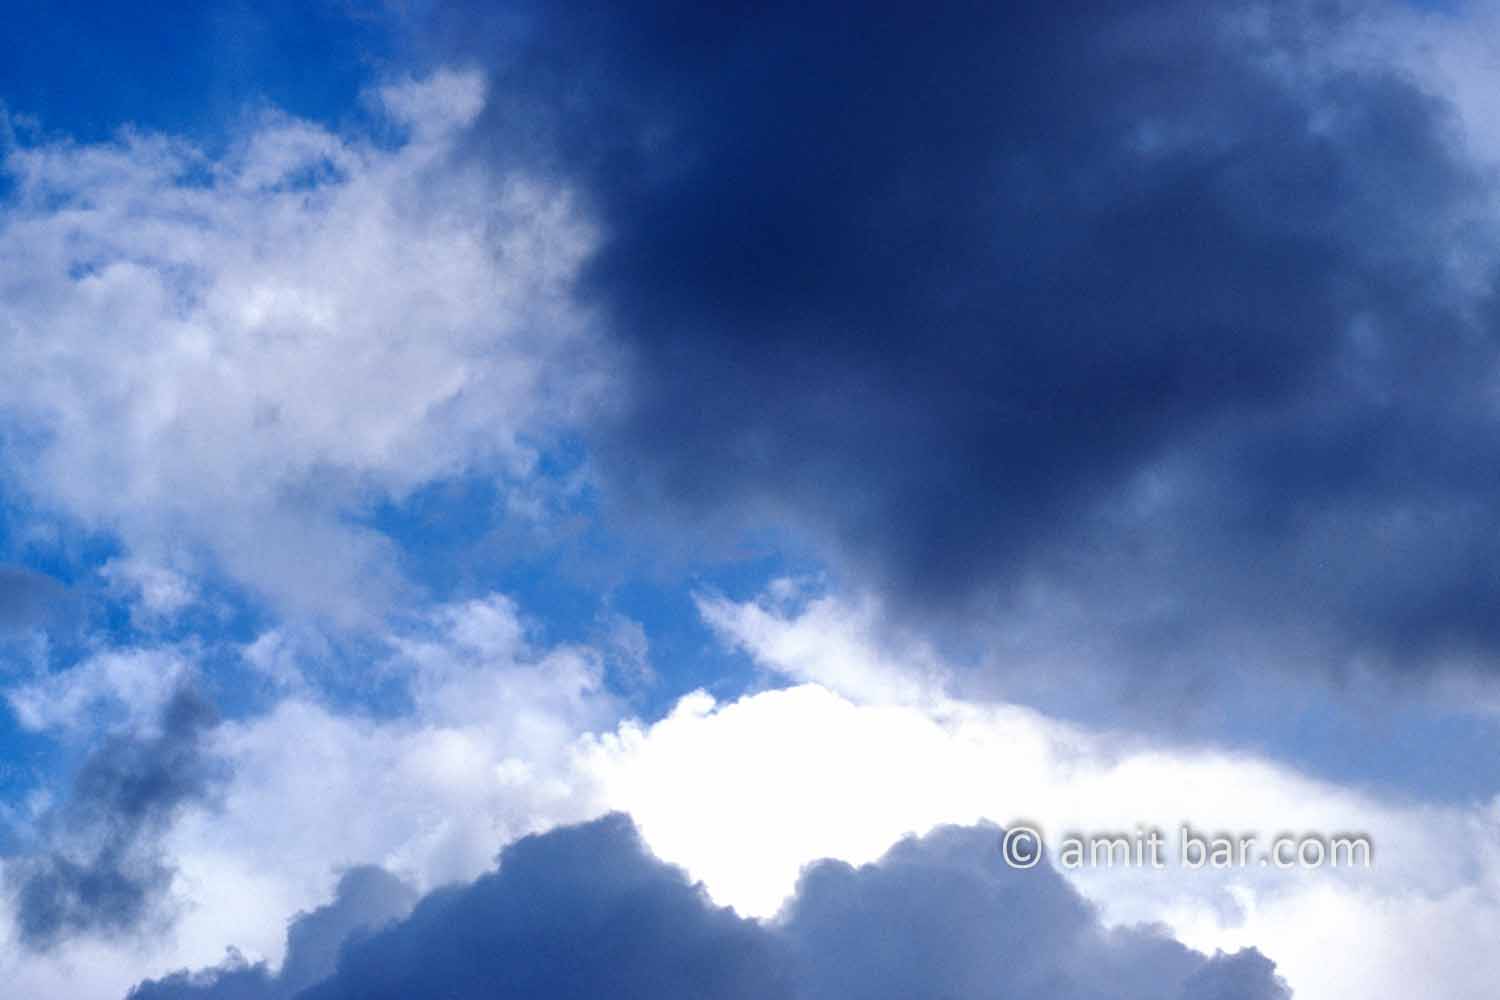 Clouds II: black and white clouds in blue sky